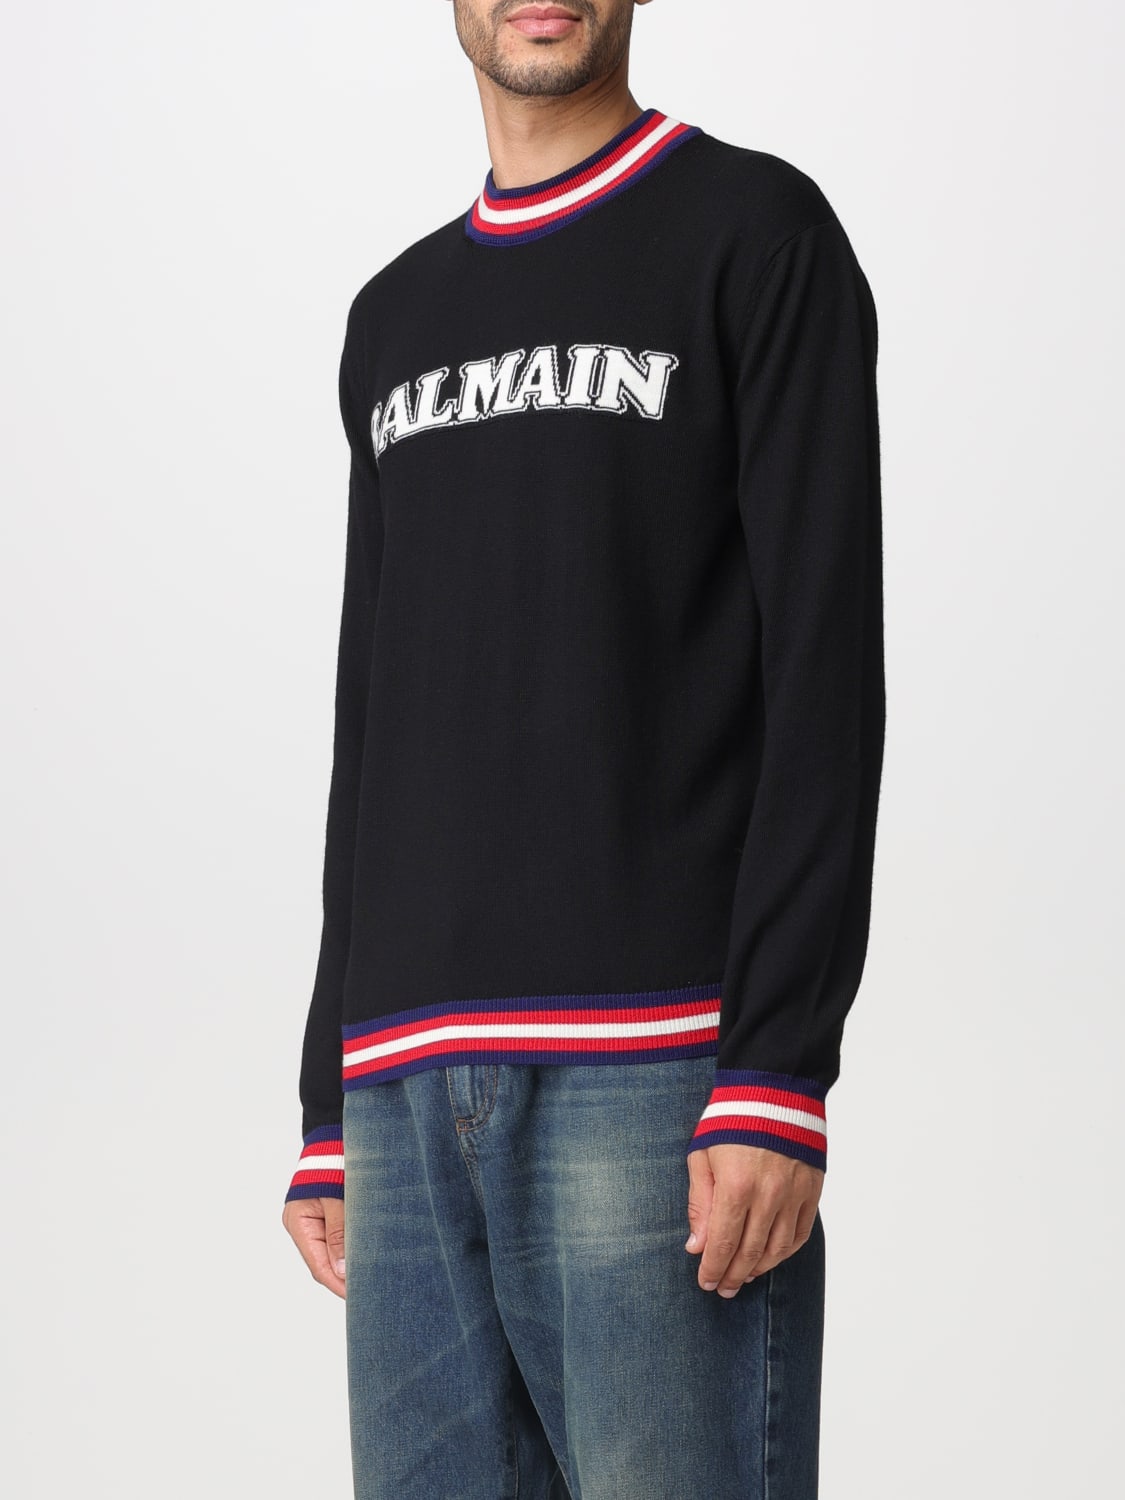 BALMAIN: sweater for man - Black | Balmain sweater BH0KD000KF45 online ...